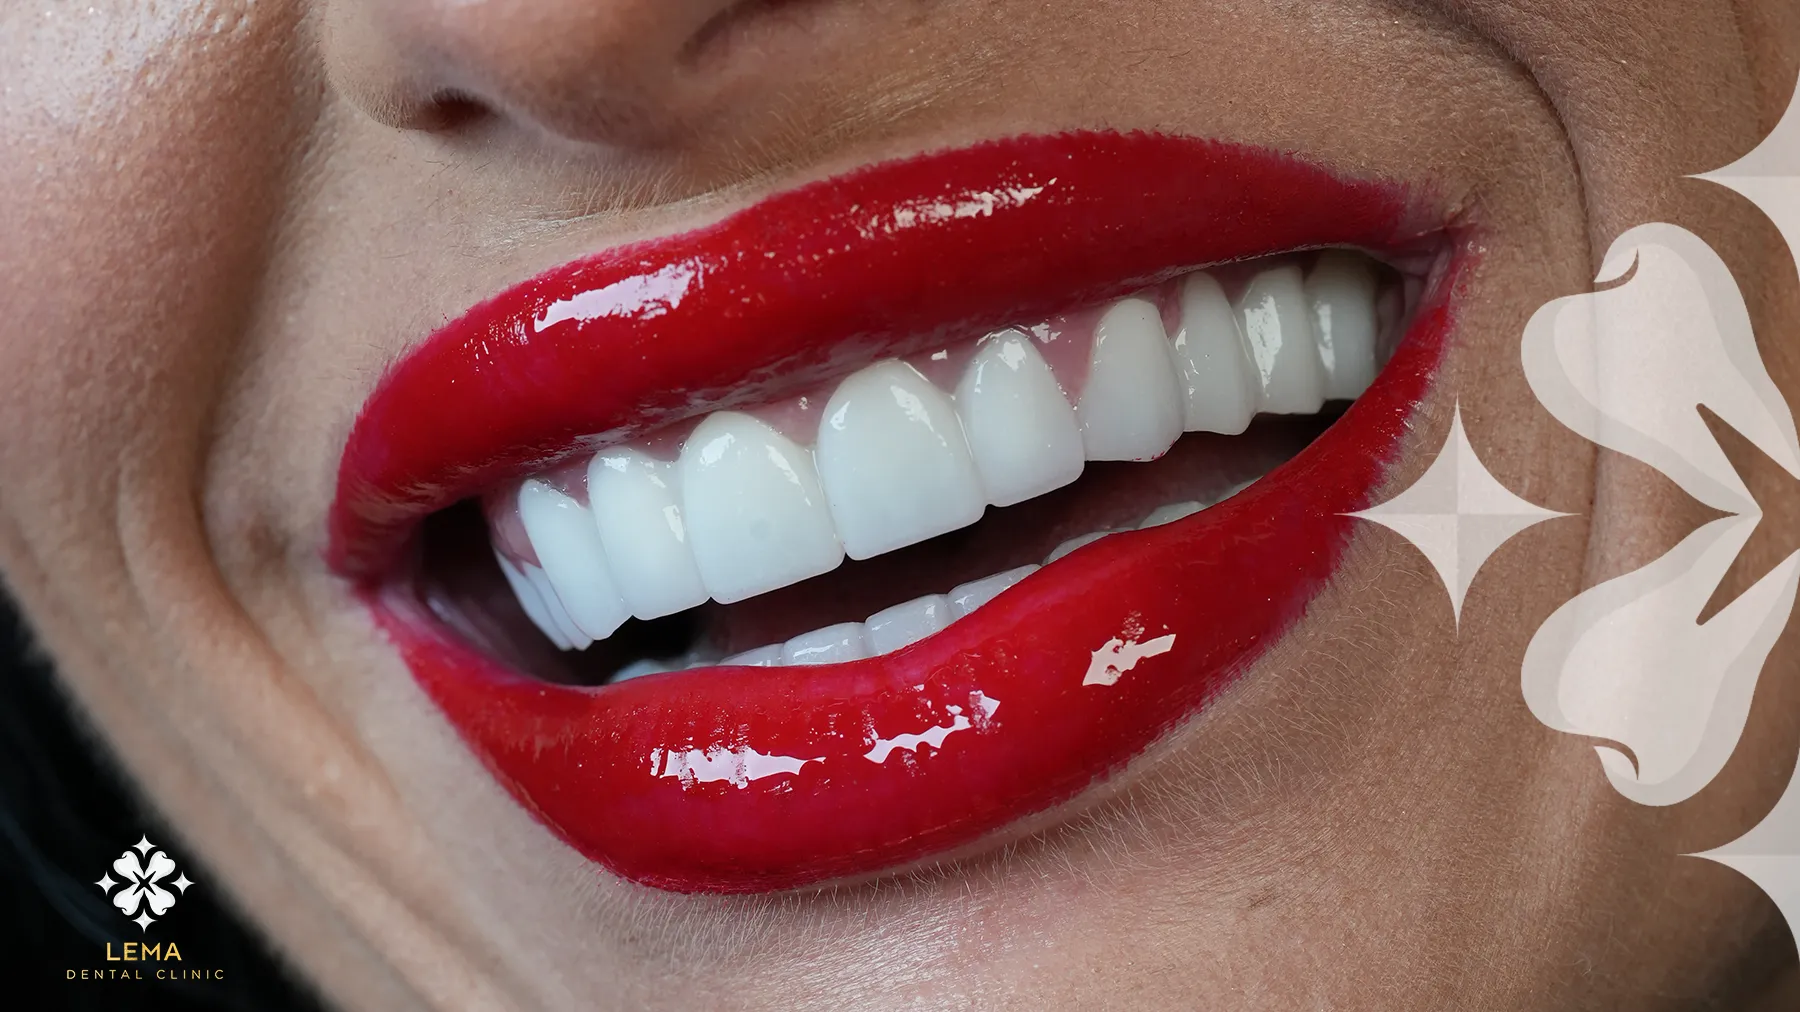 Is teeth whitening treatment harmful